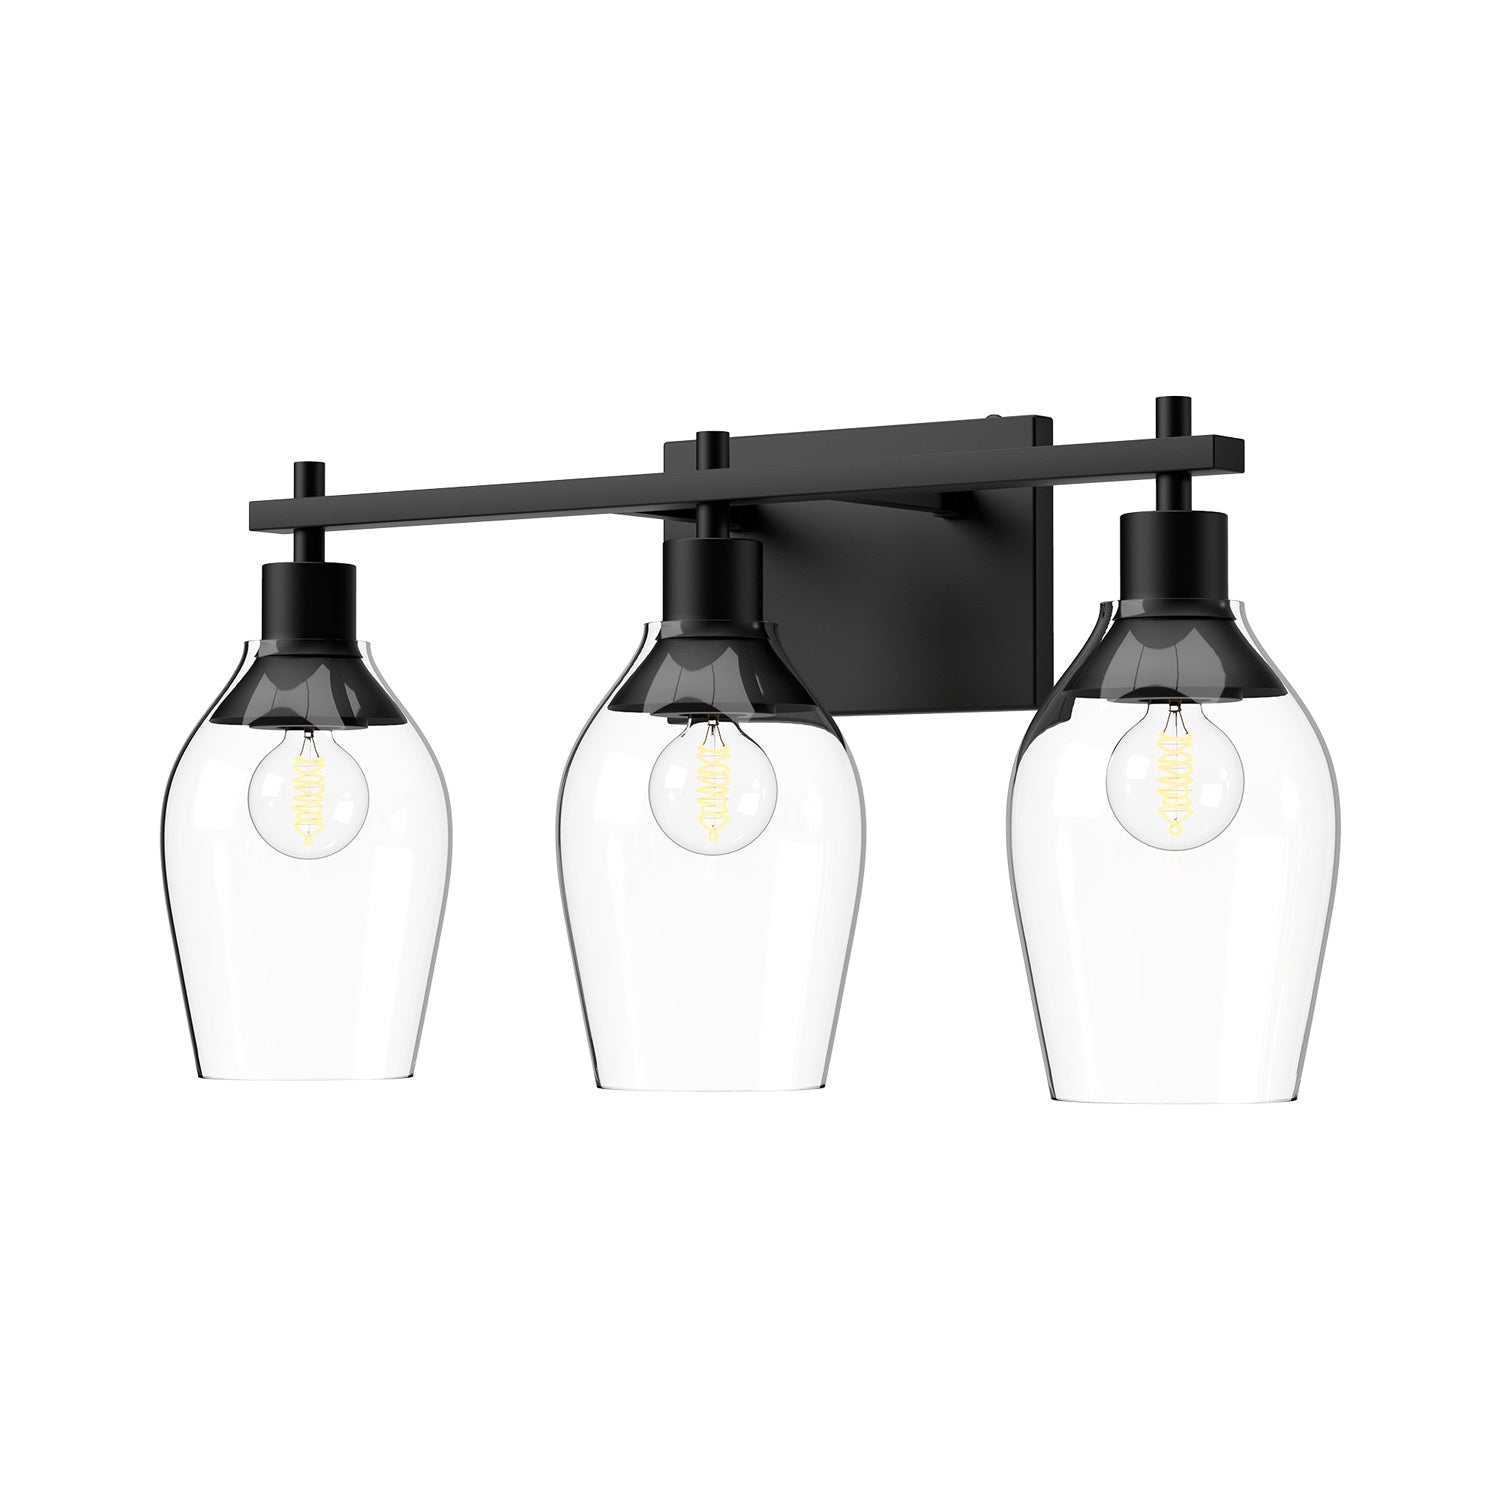 Alora - VL538322MBCL - Three Light Bathroom Fixtures - Kingsley - Clear Glass/Matte Black